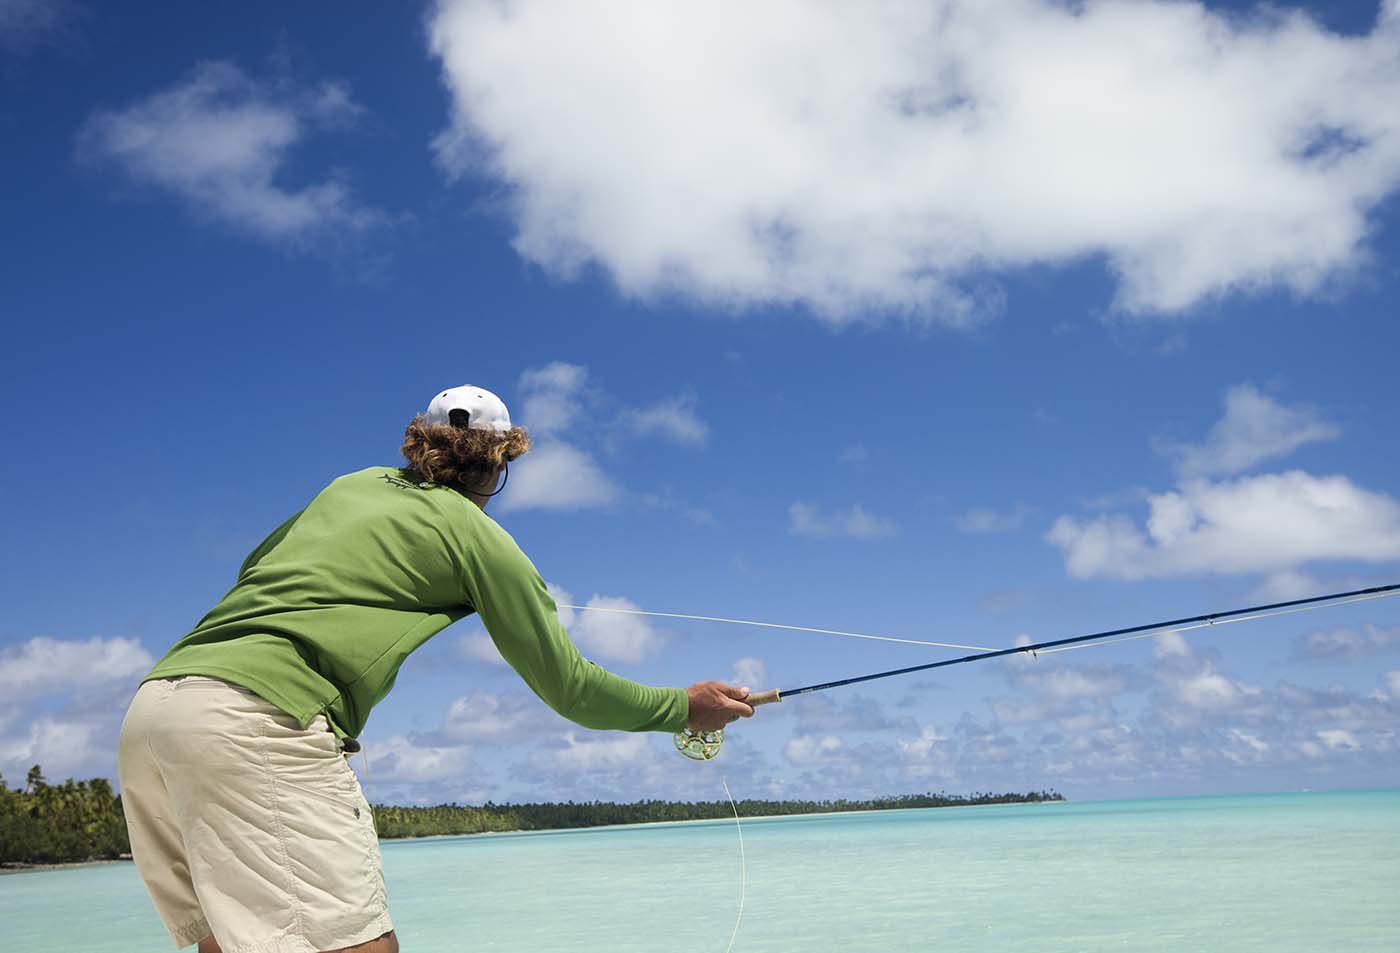 Gentleman Bonefishing in the clear blue lagoon in Aitutaki